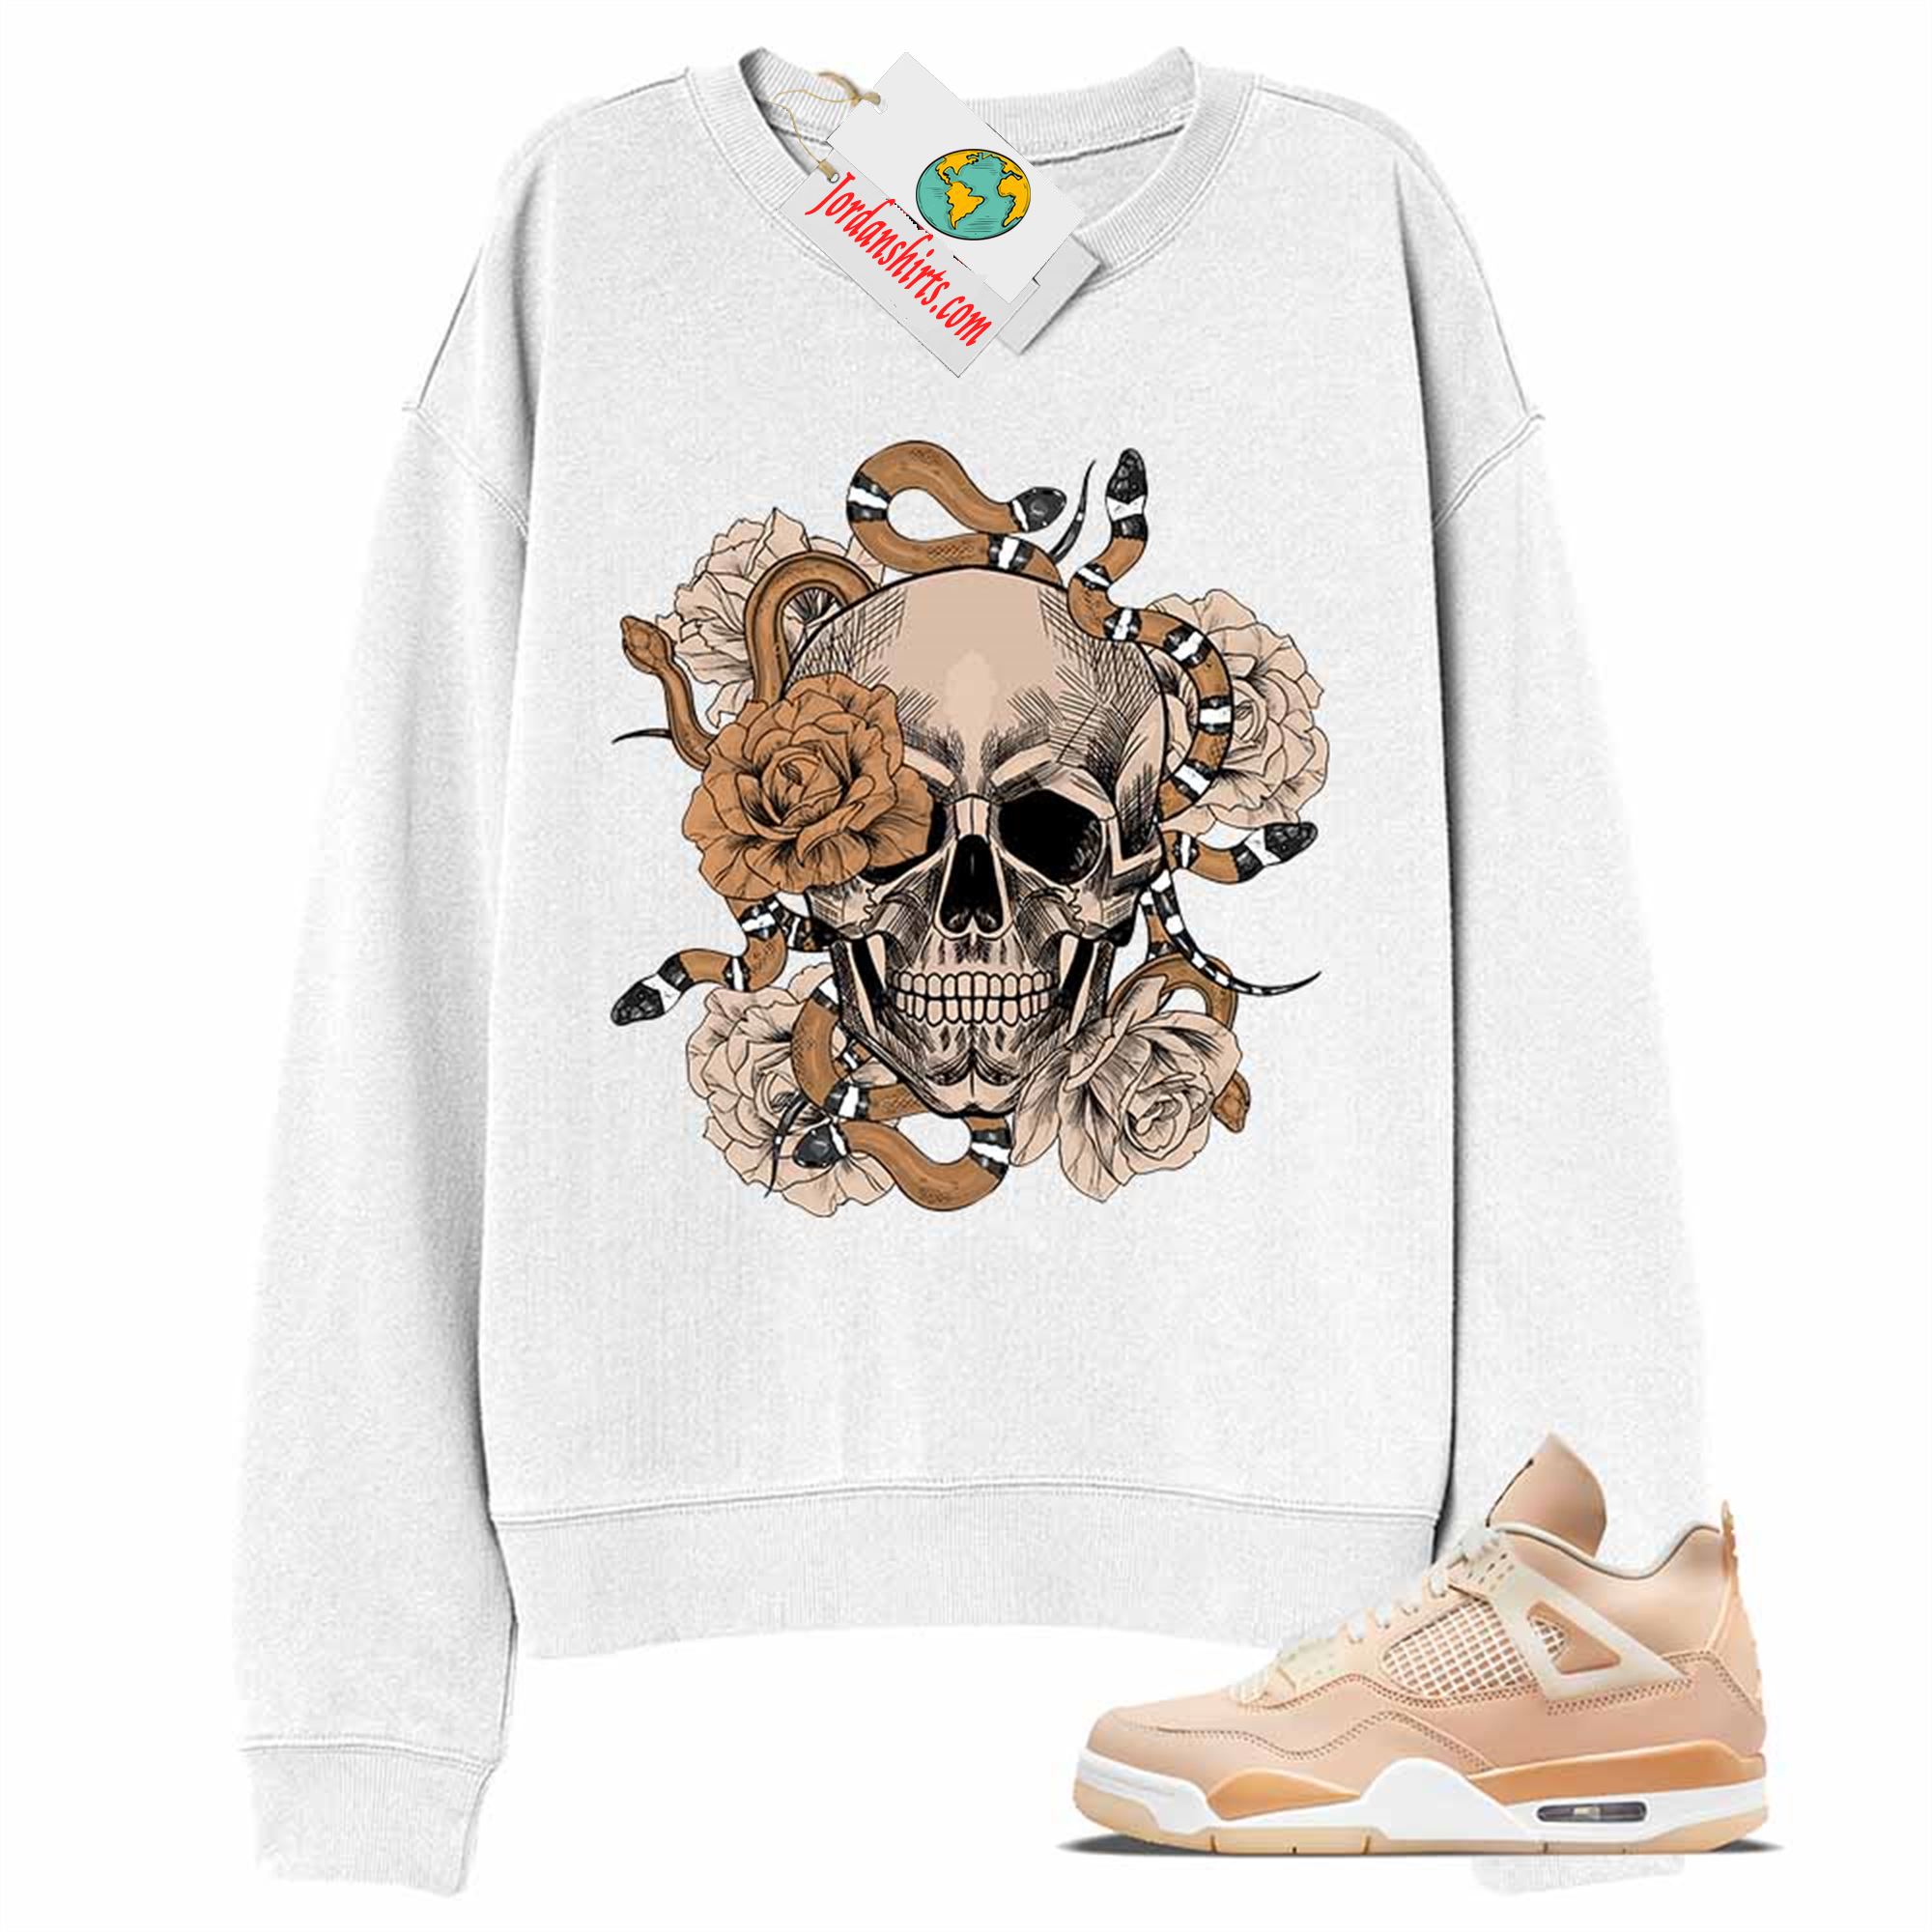 Jordan 4 Sweatshirt, Snake Skull Rose White Sweatshirt Air Jordan 4 Shimmer 4s-trungten-nges0 Full Size Up To 5xl